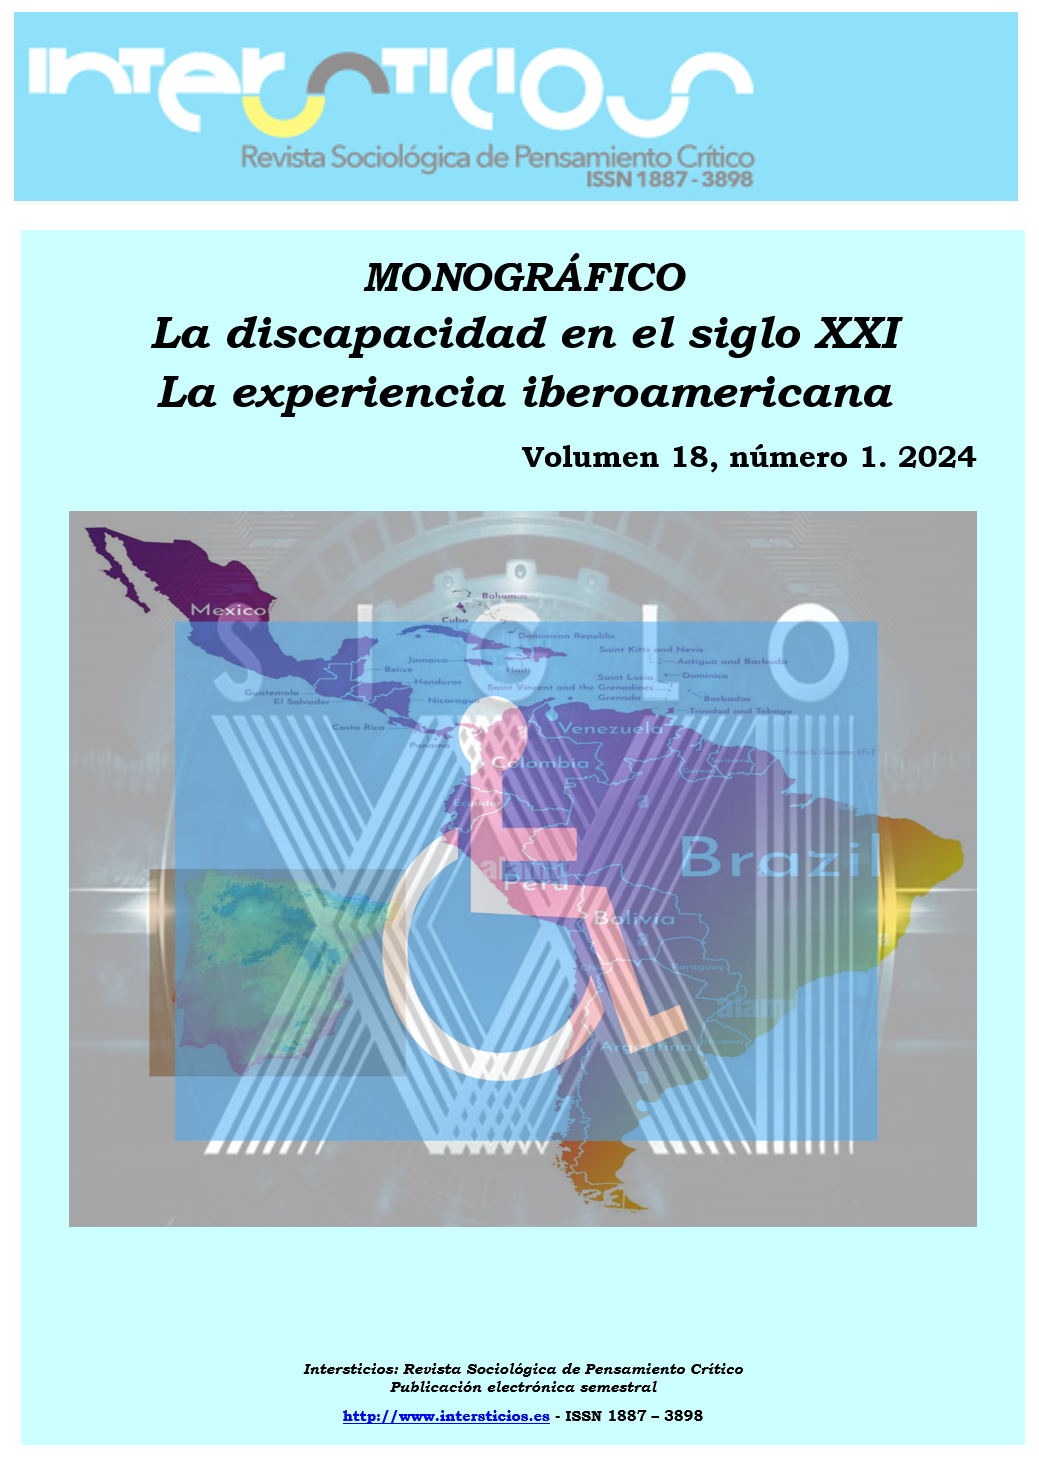 iberoamérica s. XXI: la experiencia de la discapacidad